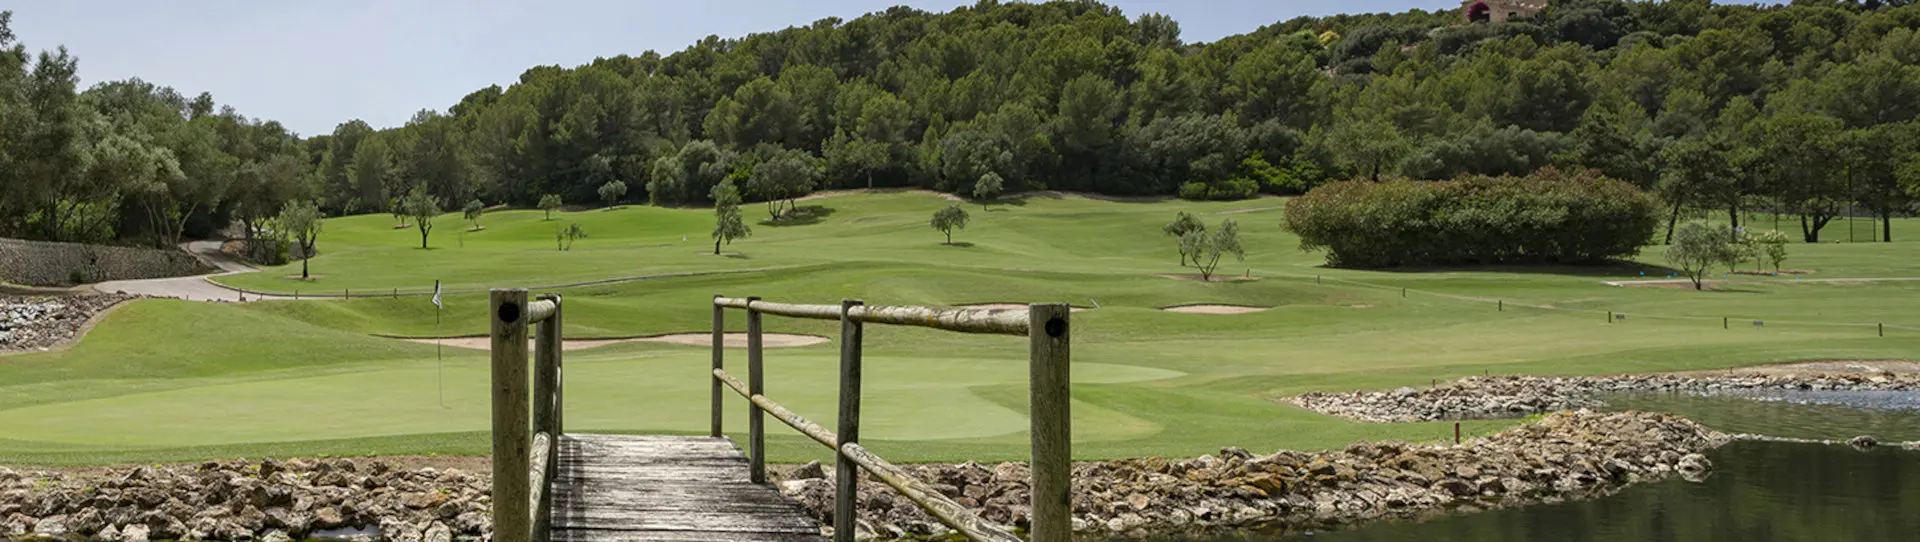 Spain golf courses - Arabella Son Muntaner Golf Course - Photo 1